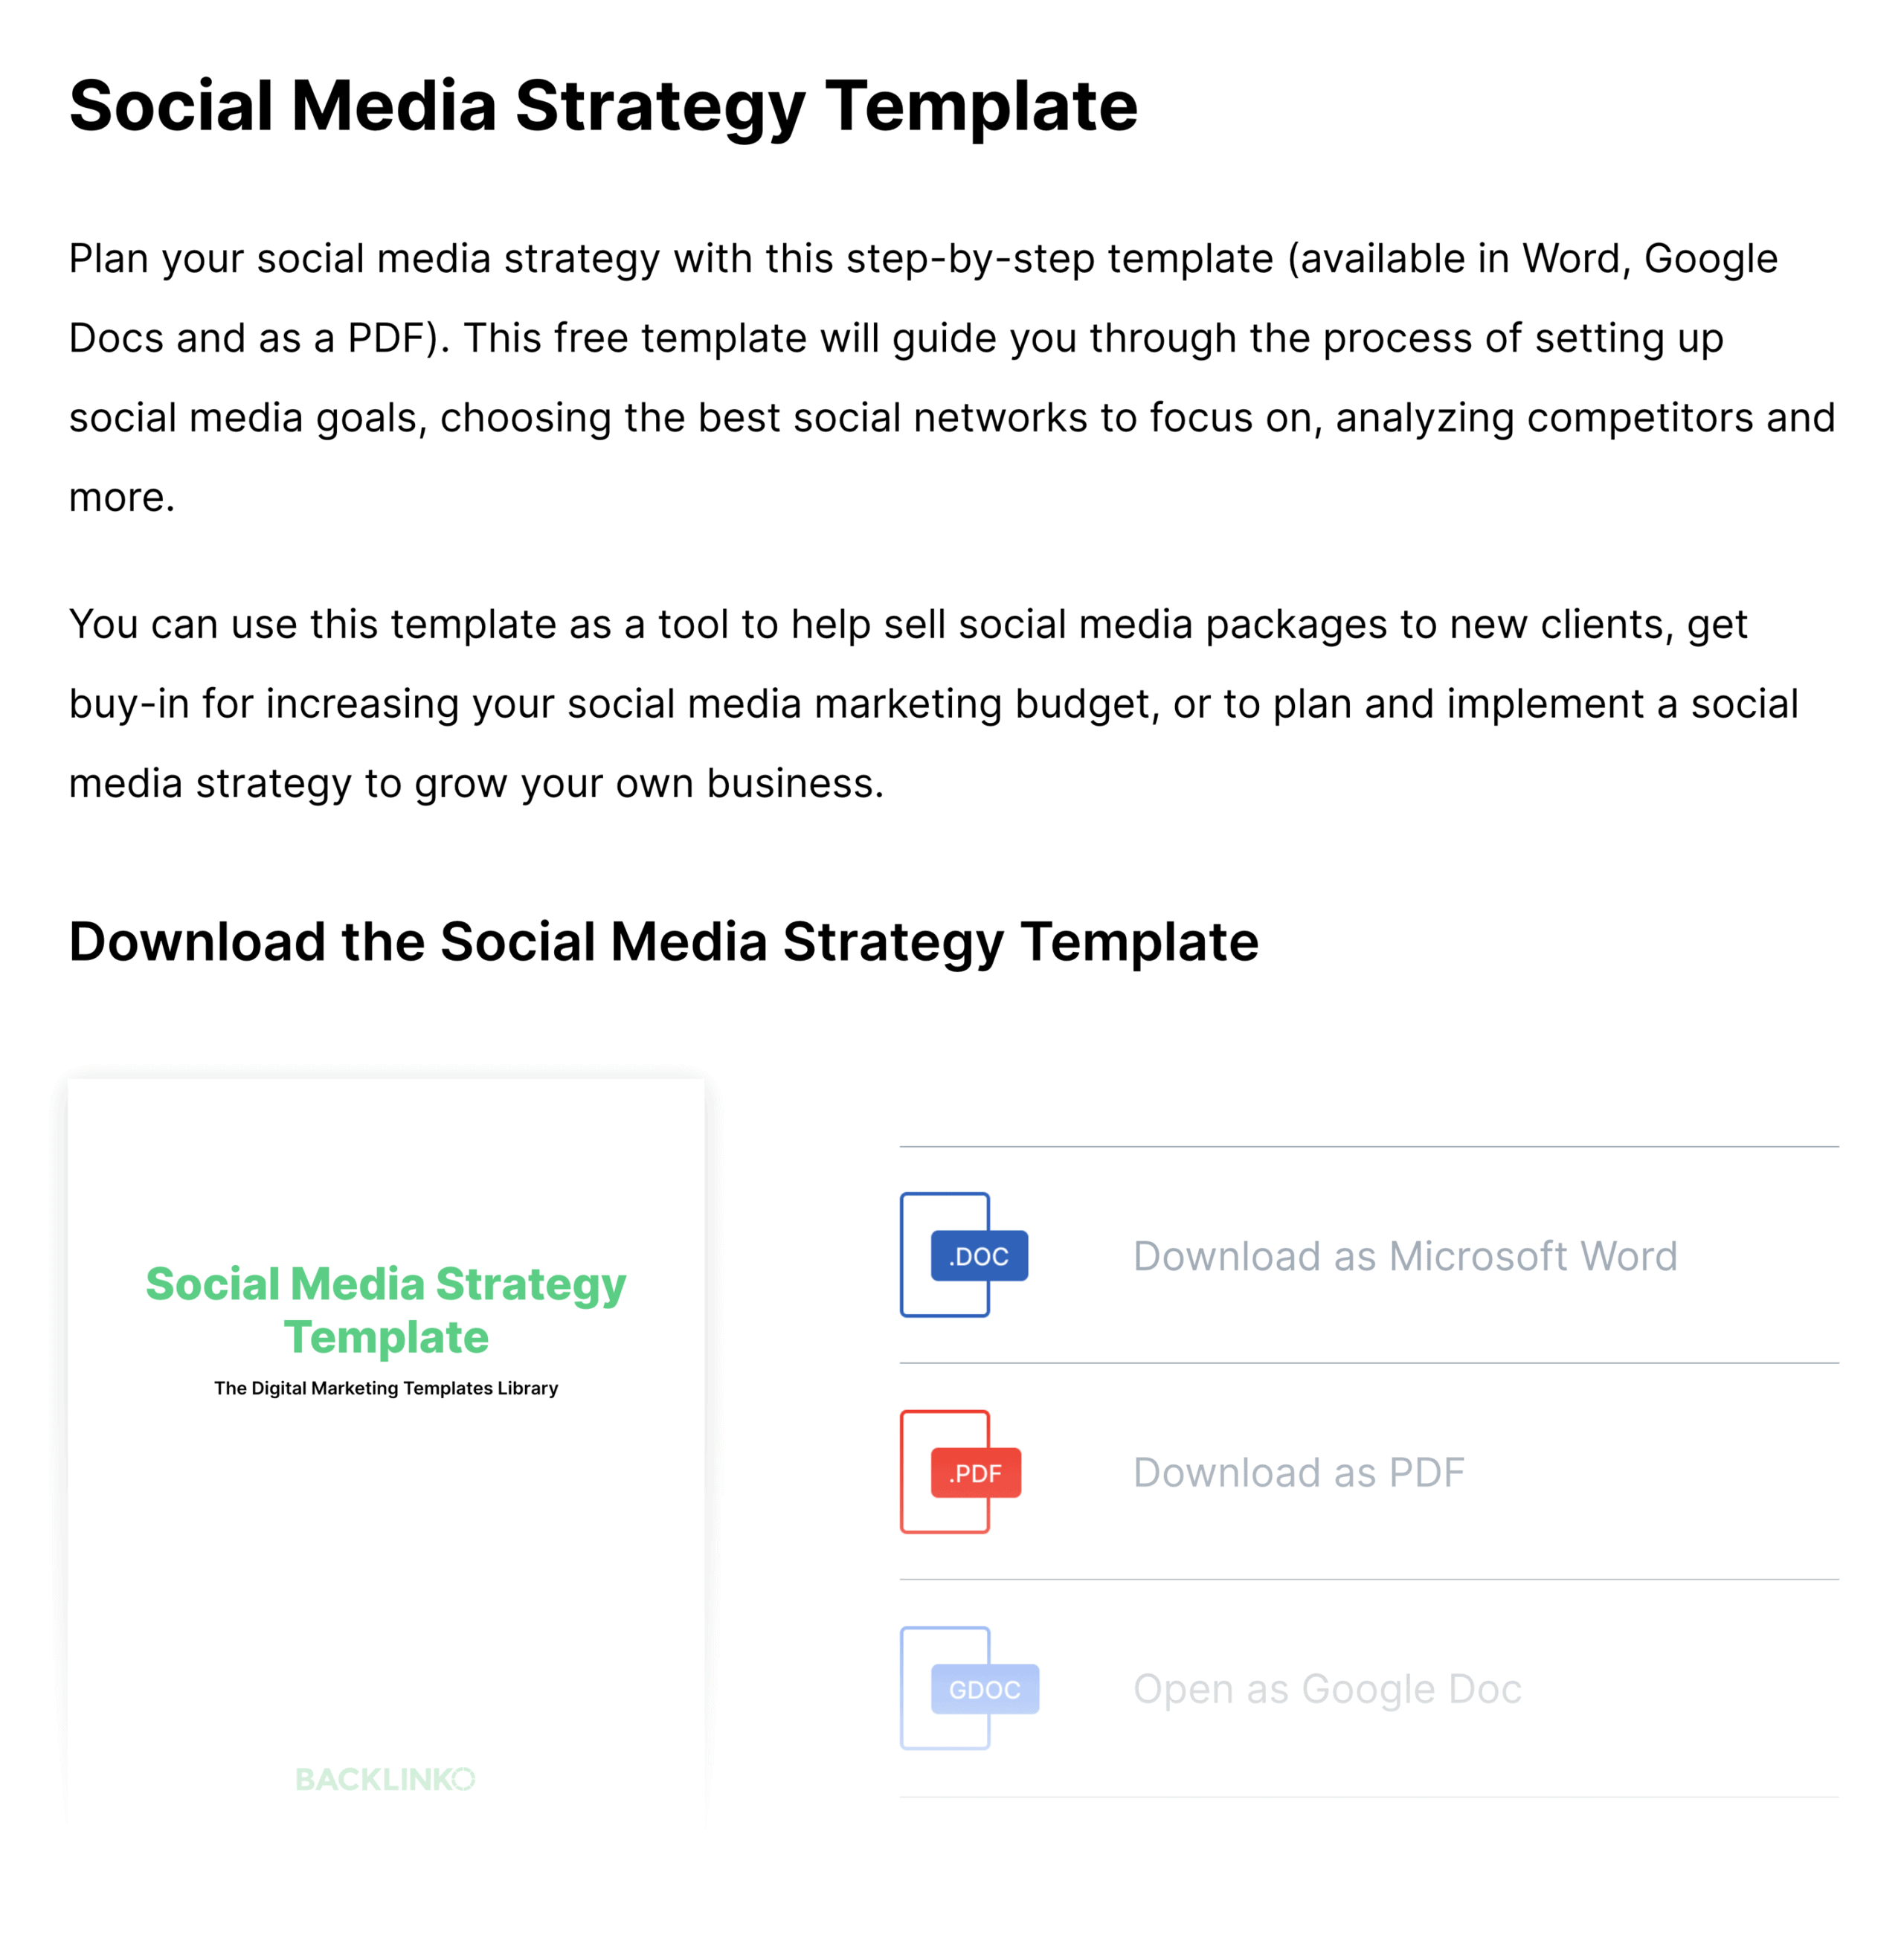 Backlinko – Social Media Strategy Template